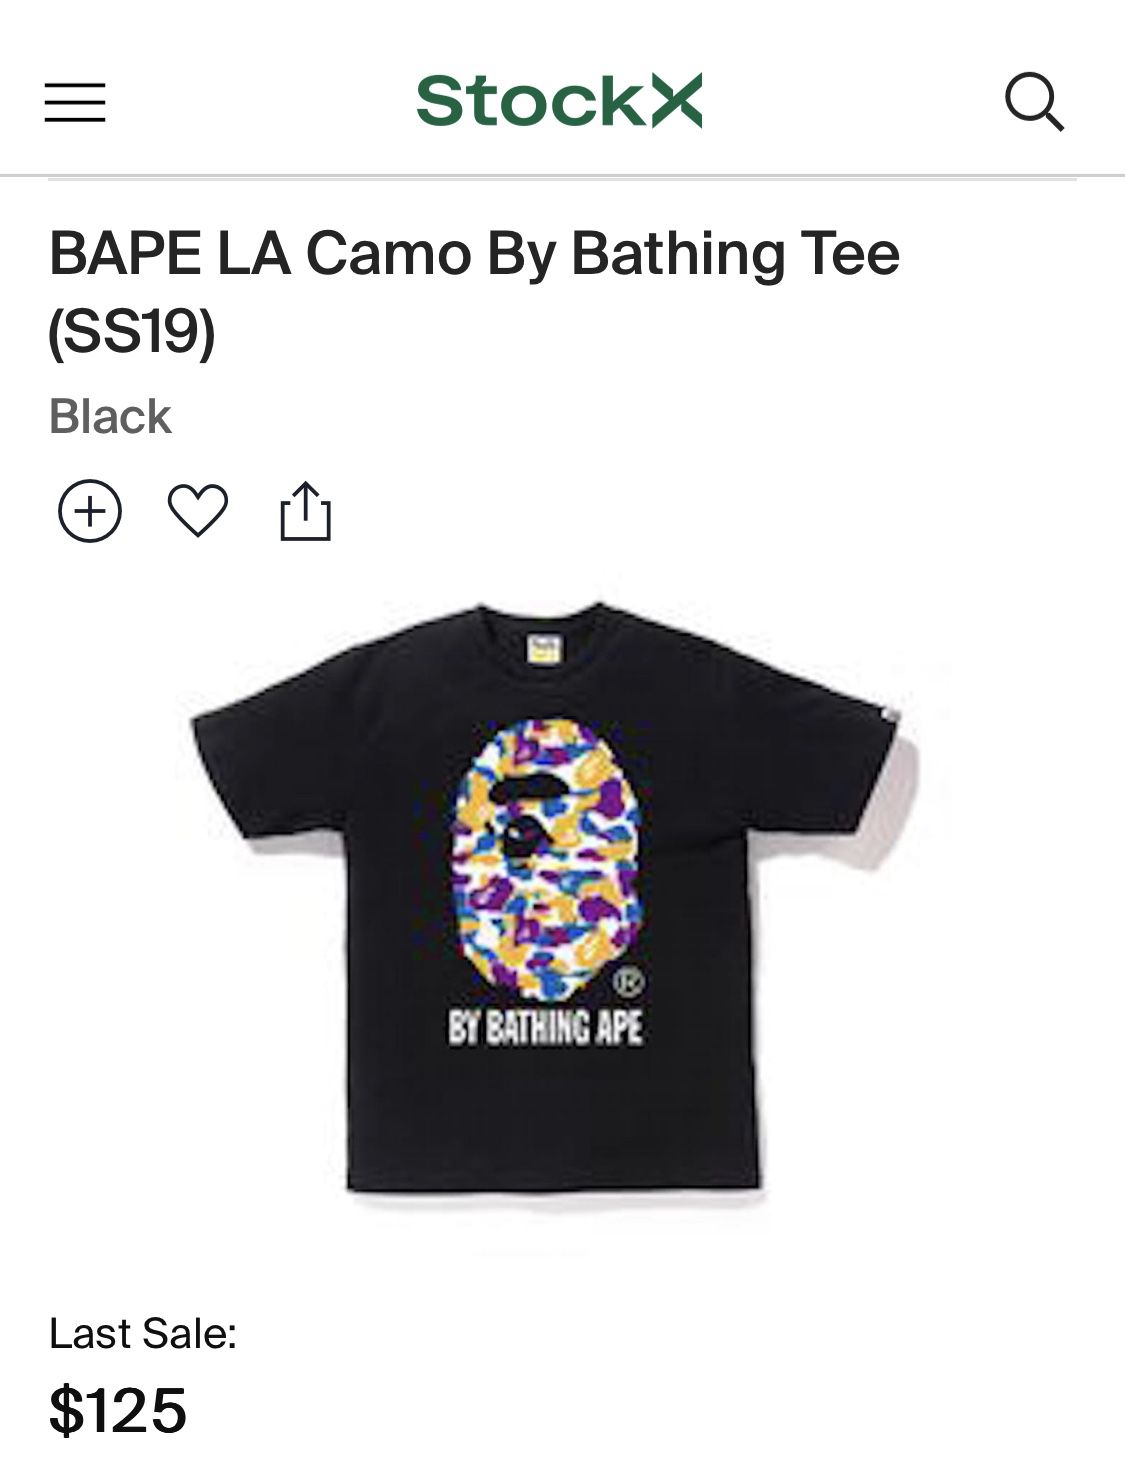 BAPE LA Camo By Bathing Tee (SS19) Black